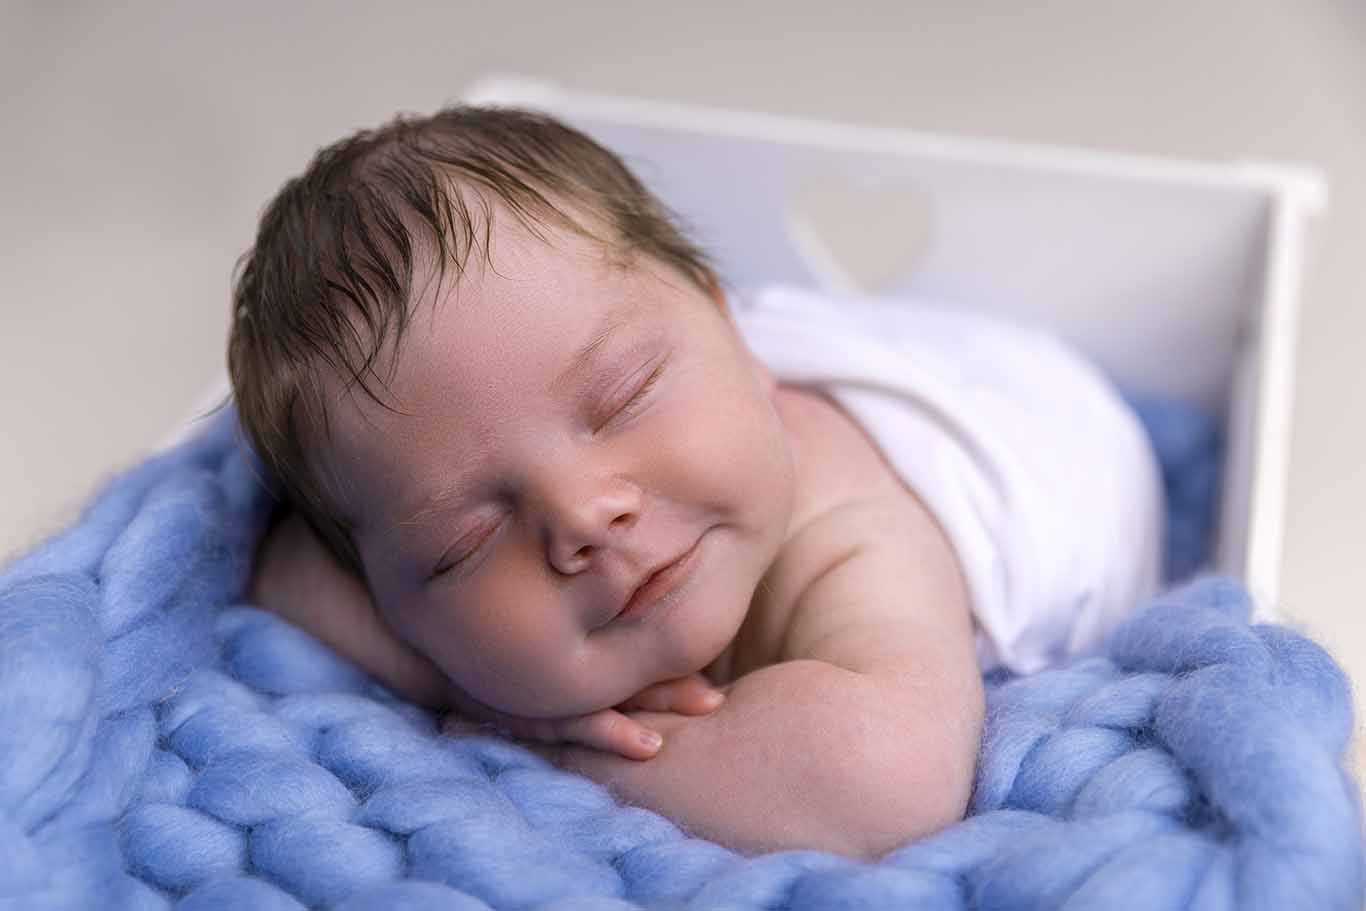 newborn smiling